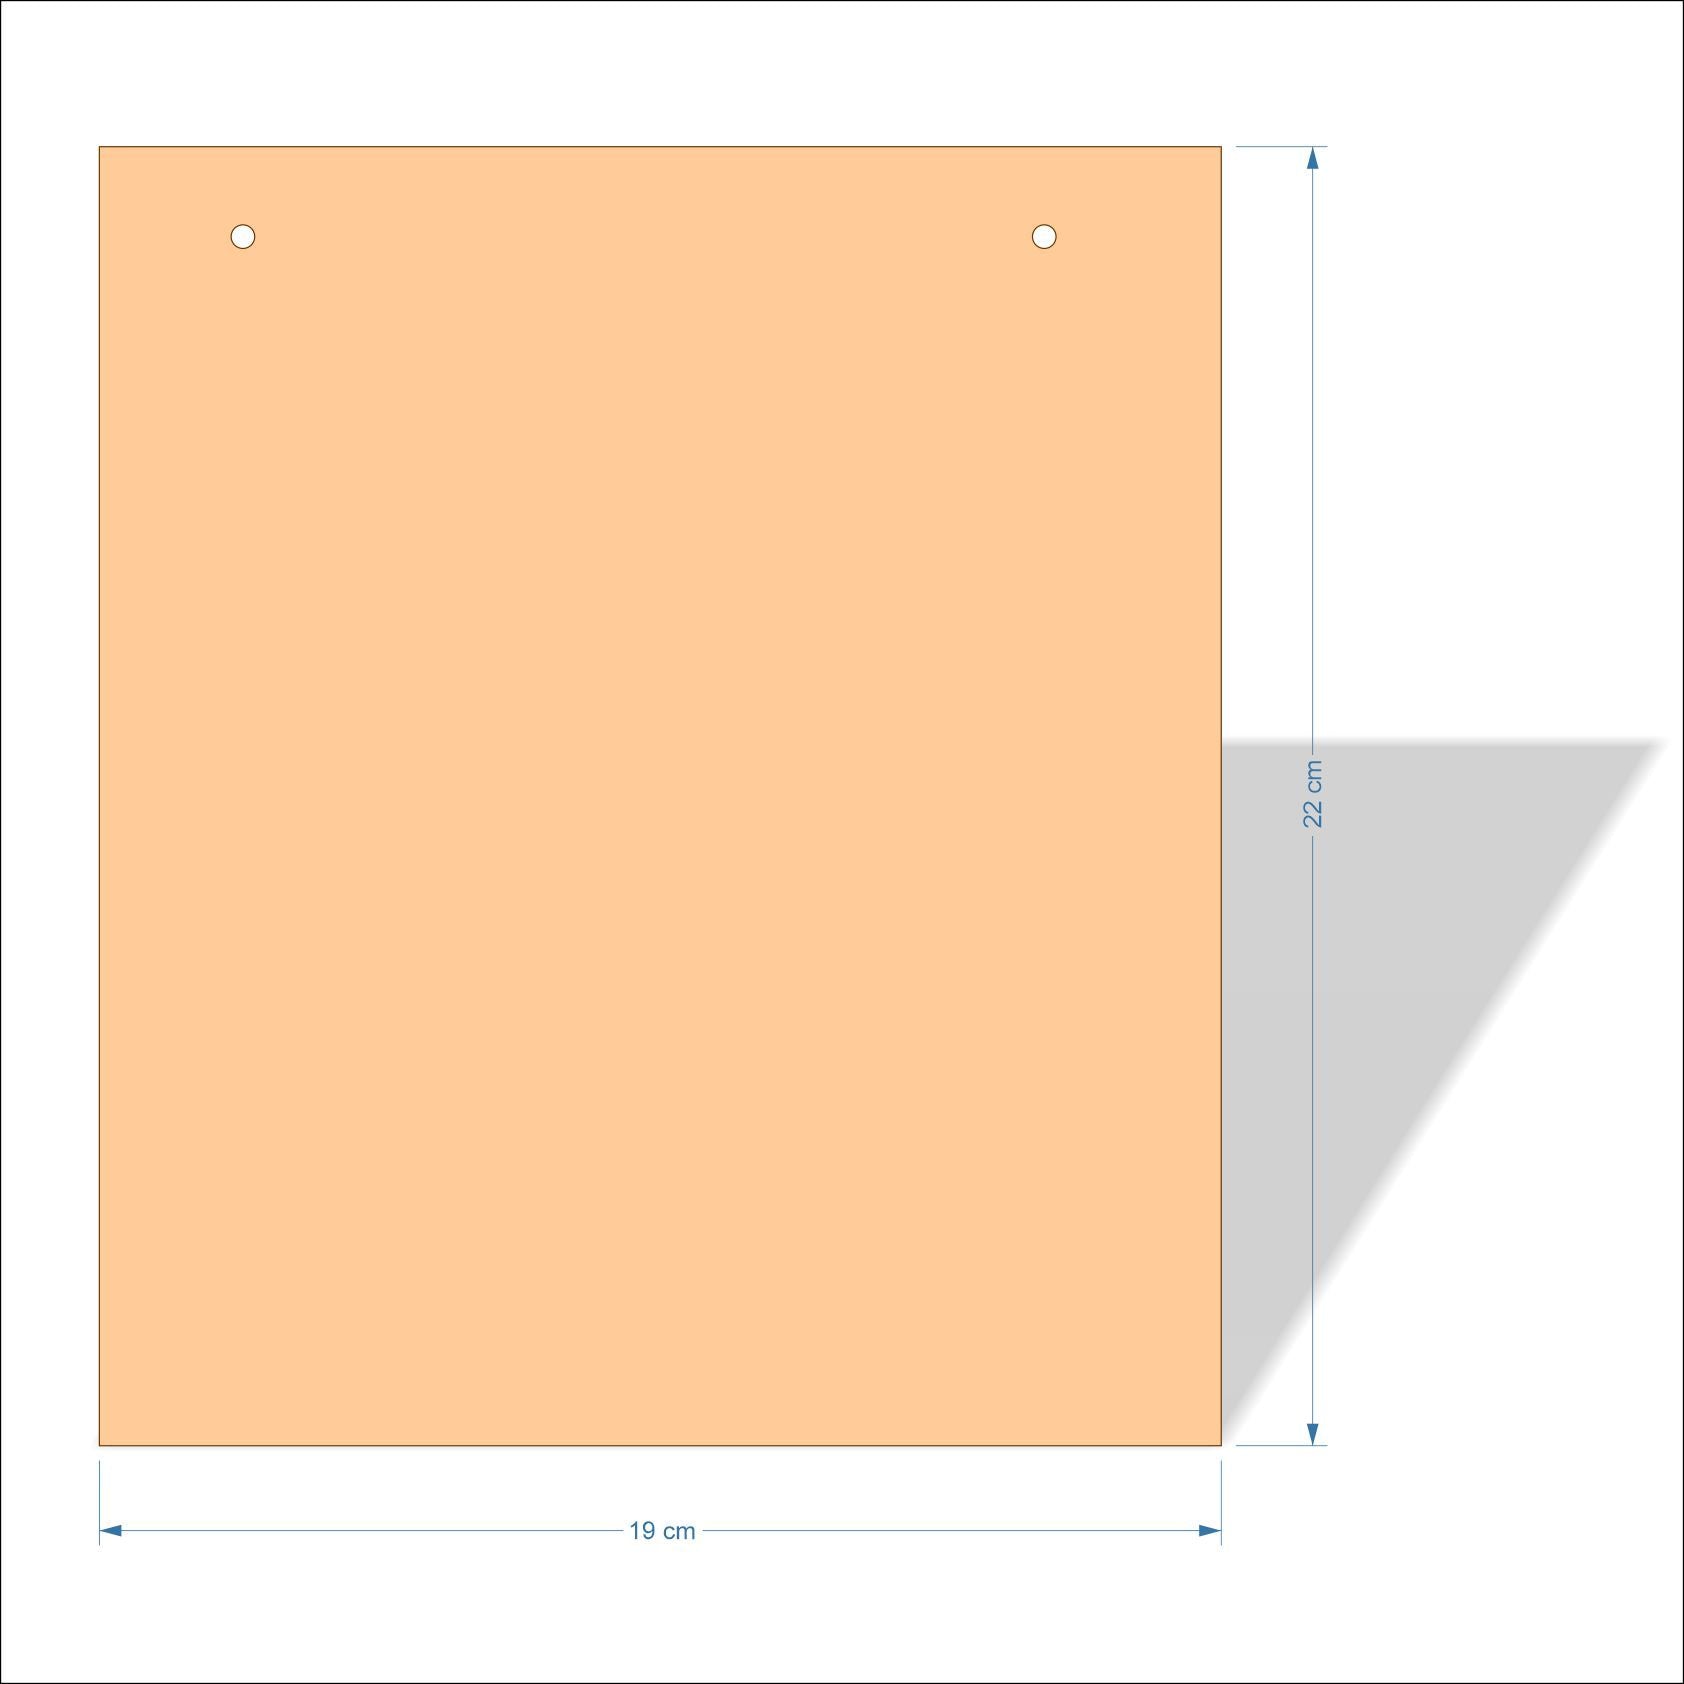 19 cm X 22 cm 3mm MDF Plaques with square corners